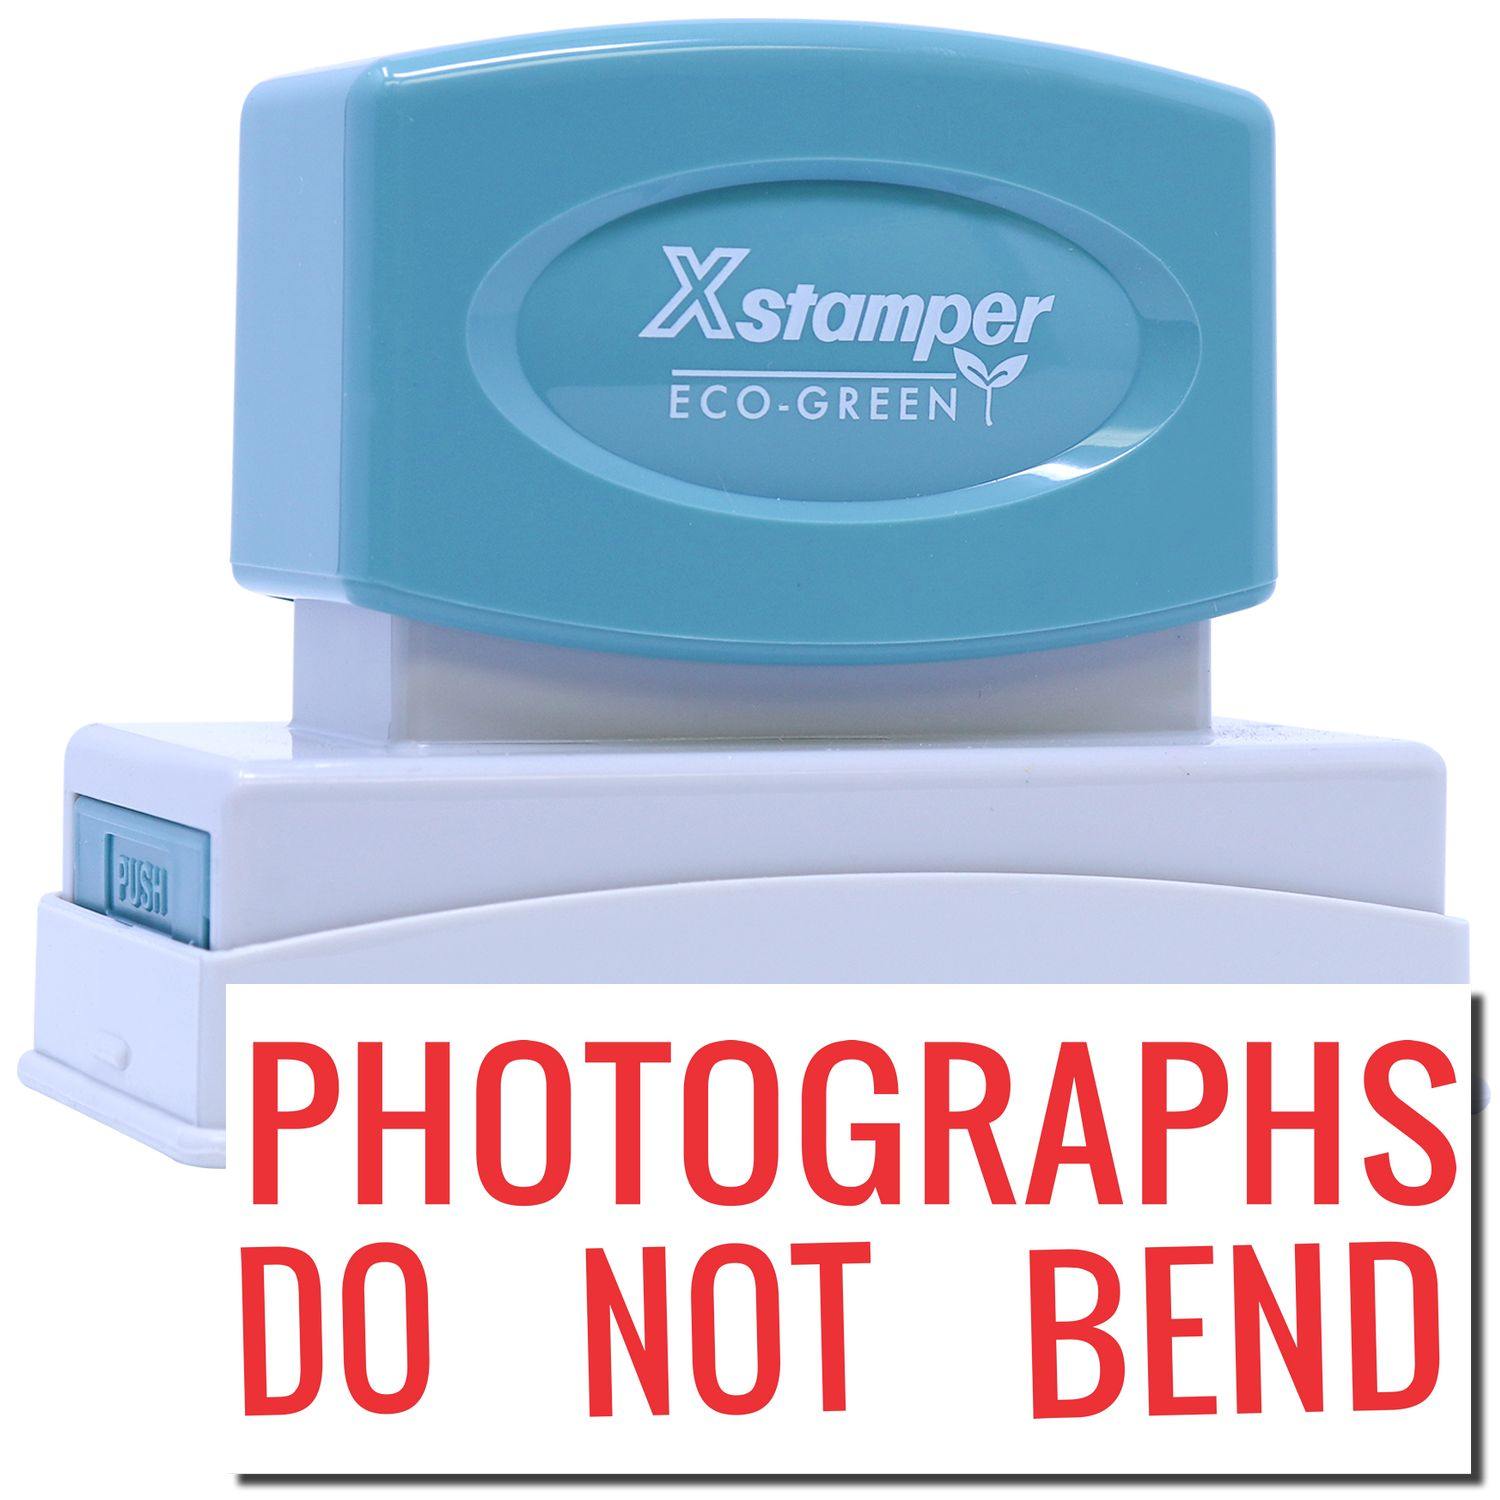 Photographs Do Not Bend Xstamper Stamp Main Image